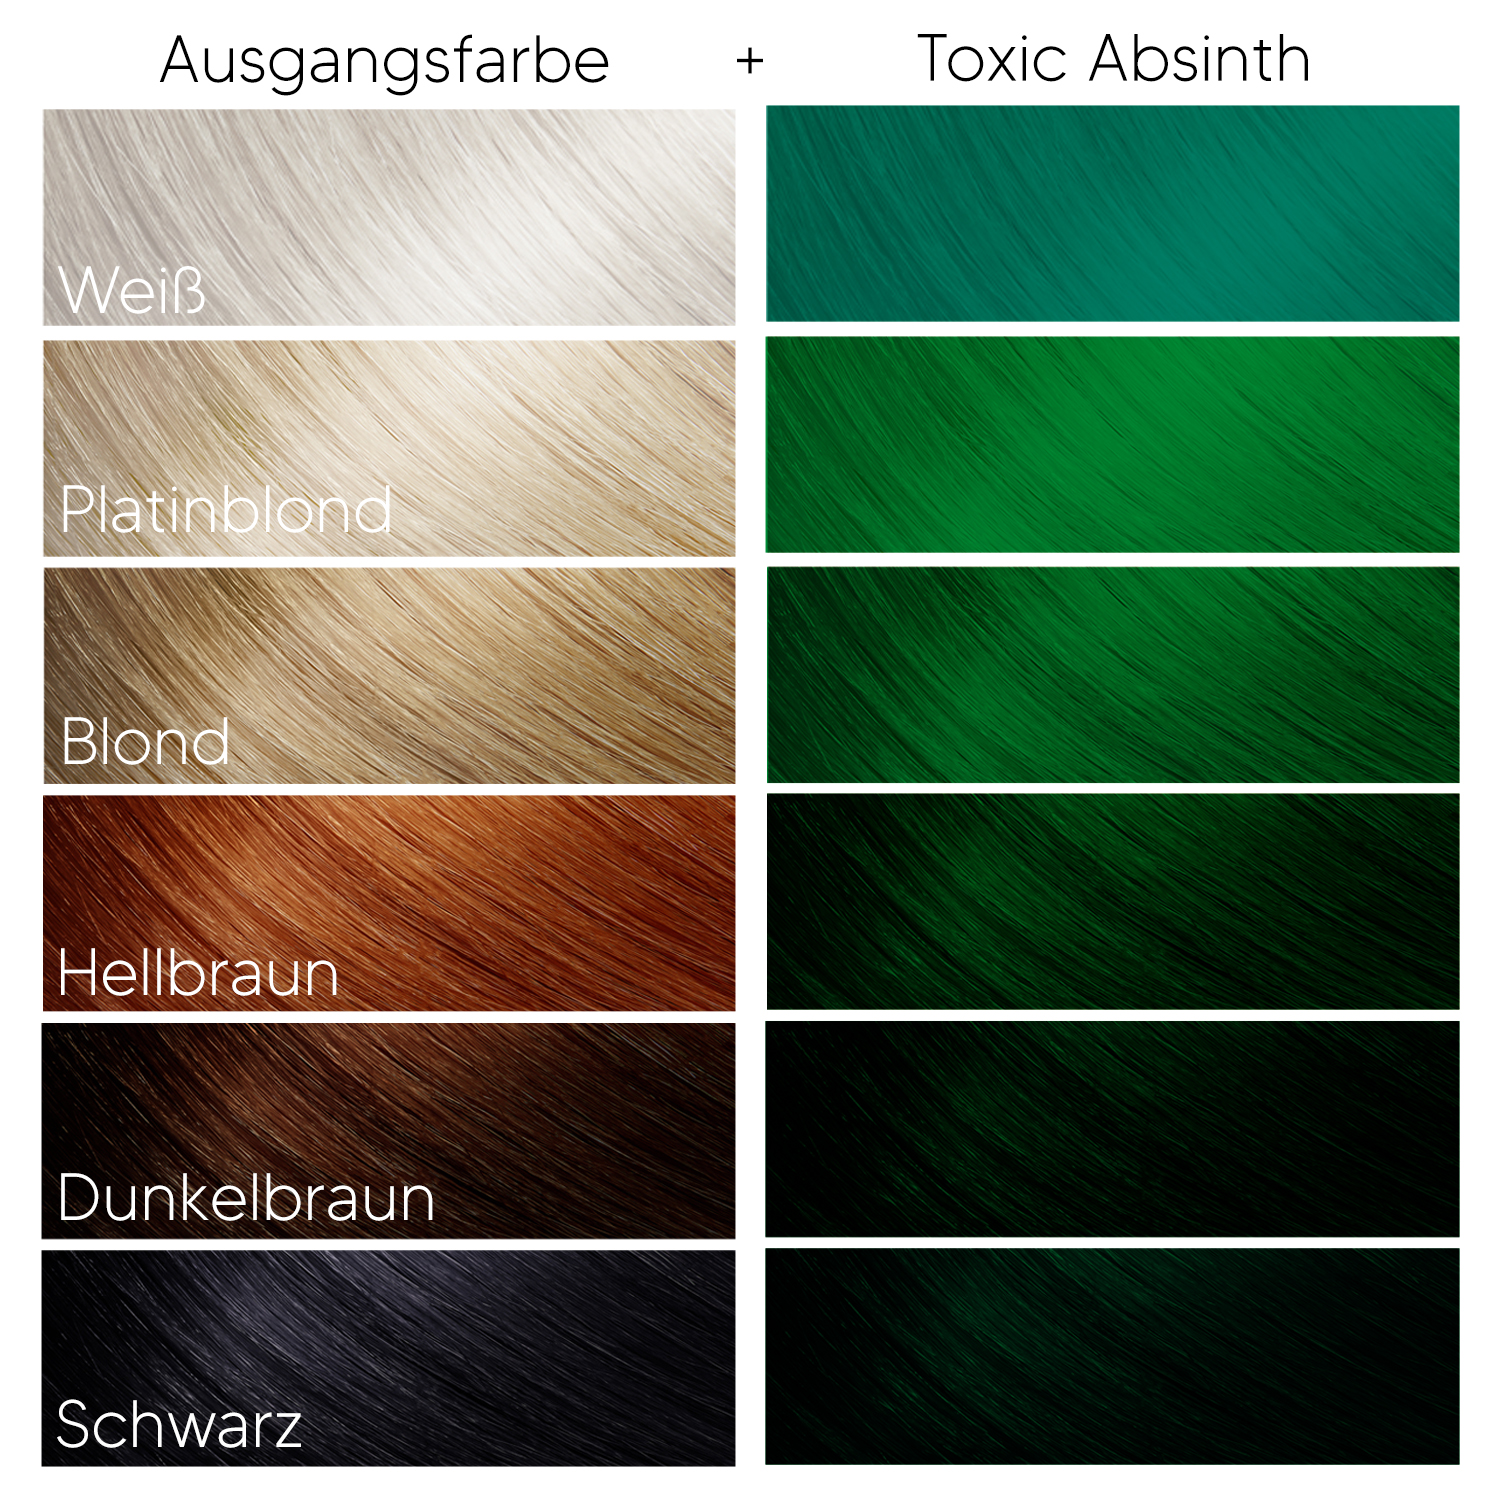 Toxic Absinth